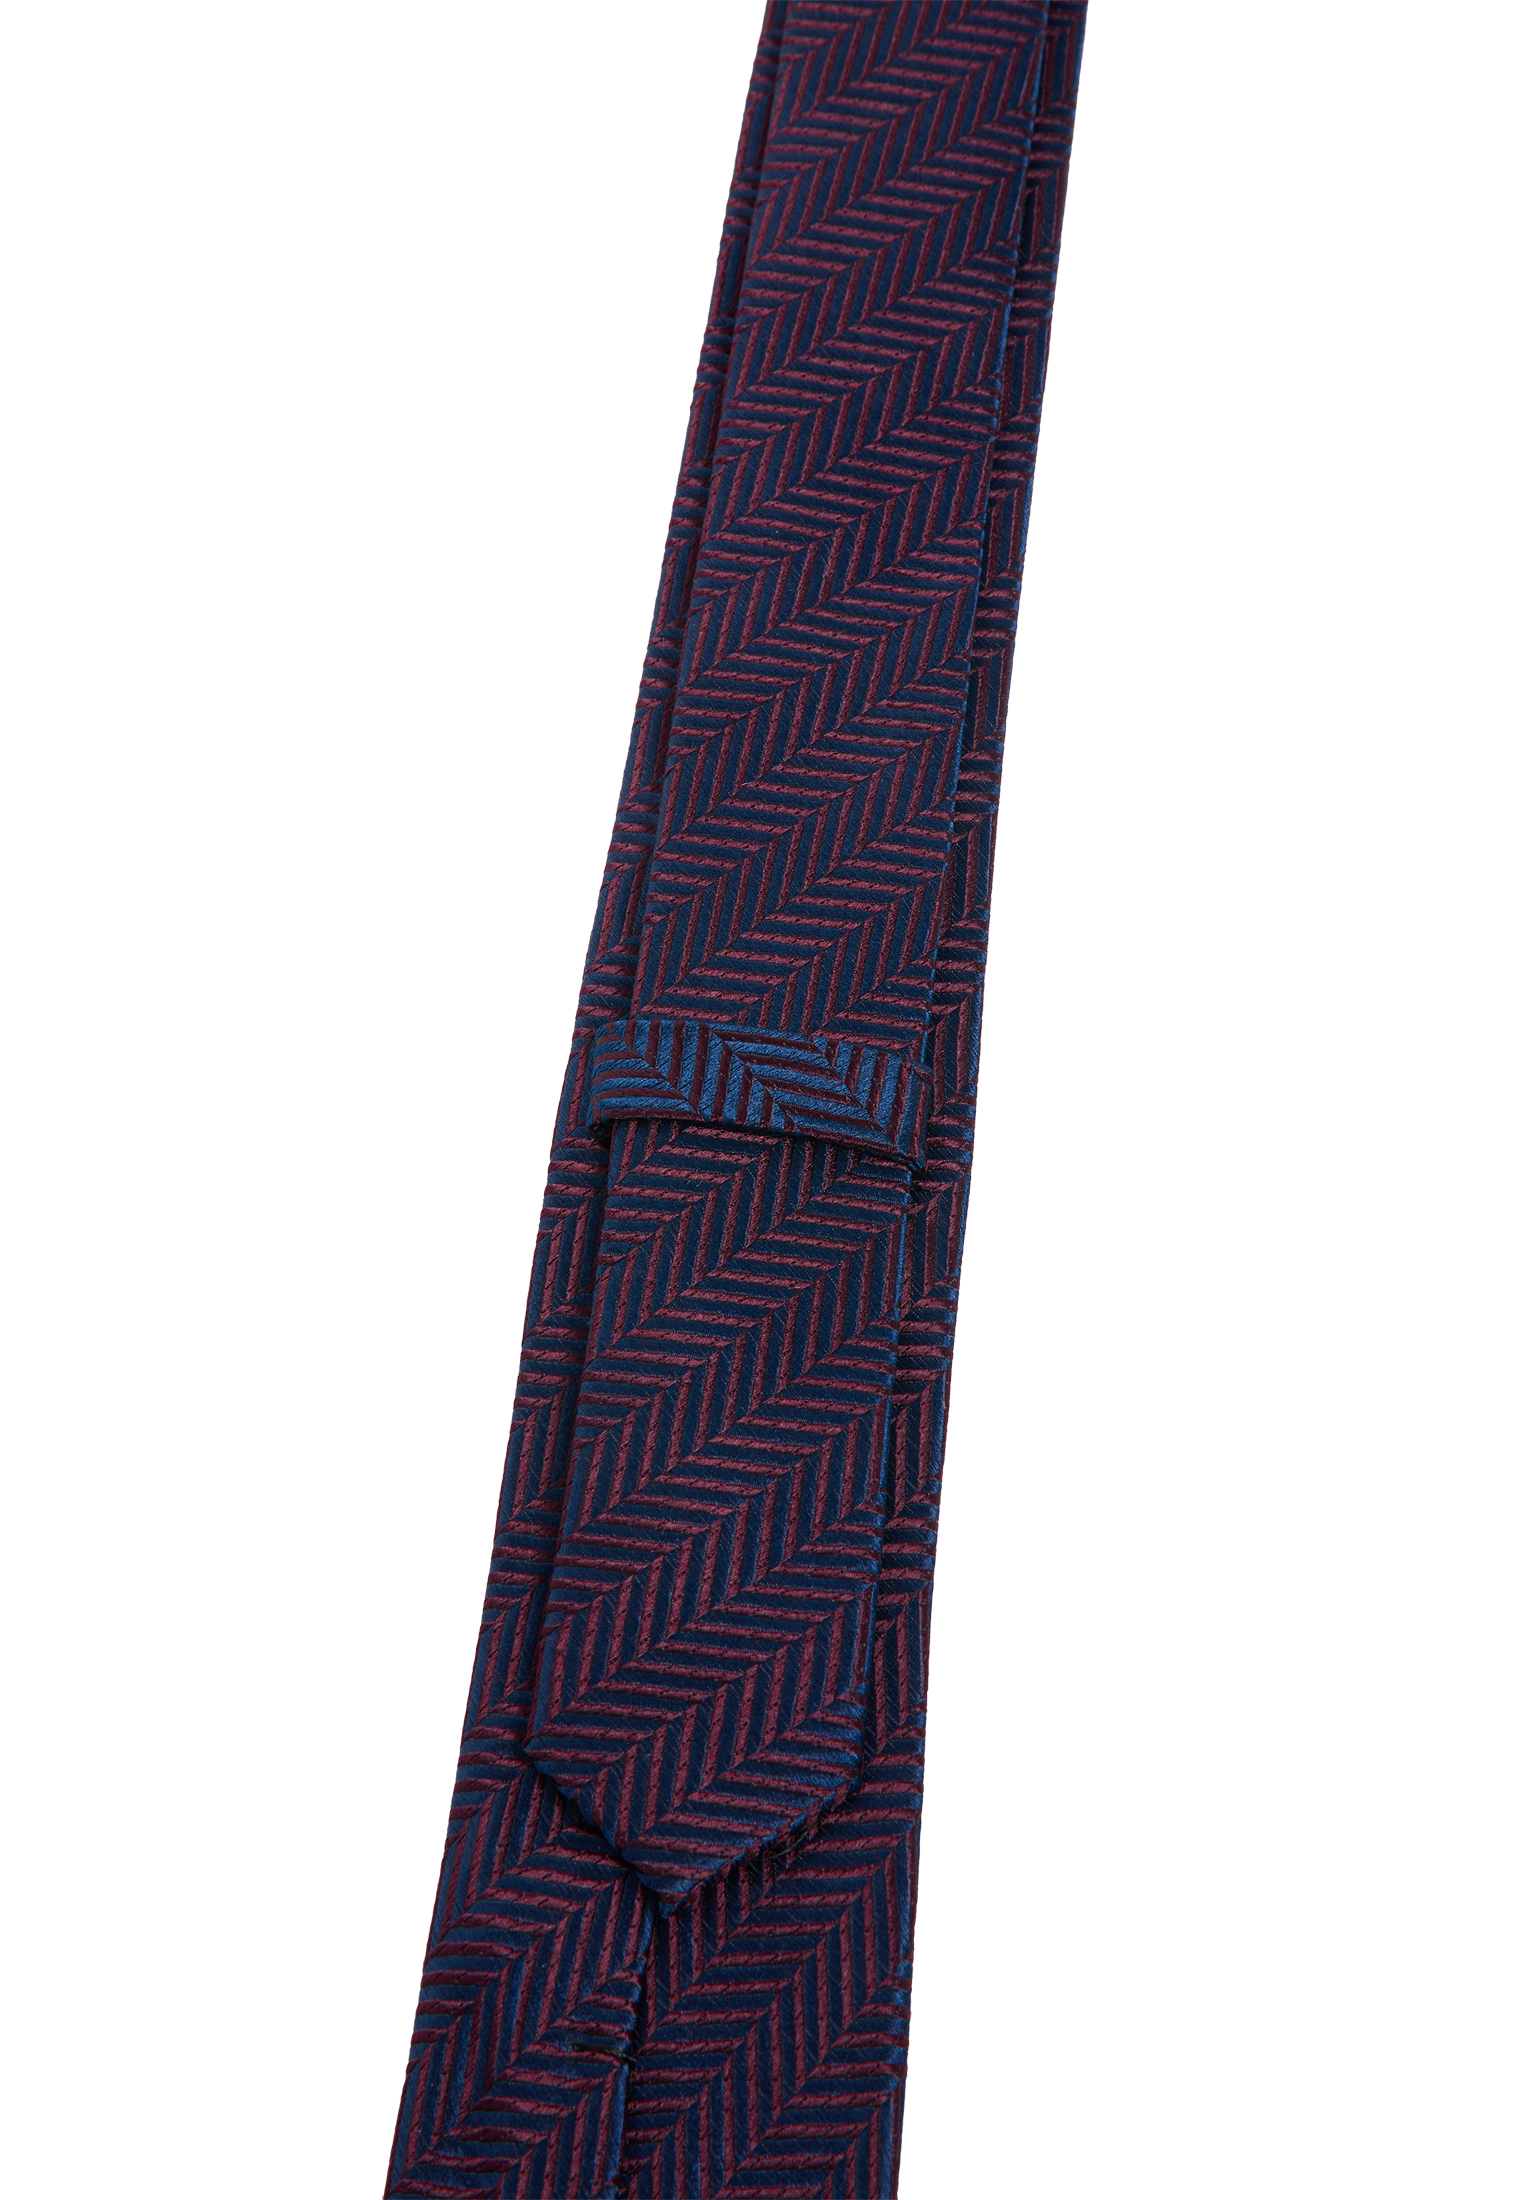 Tie in rose patterned